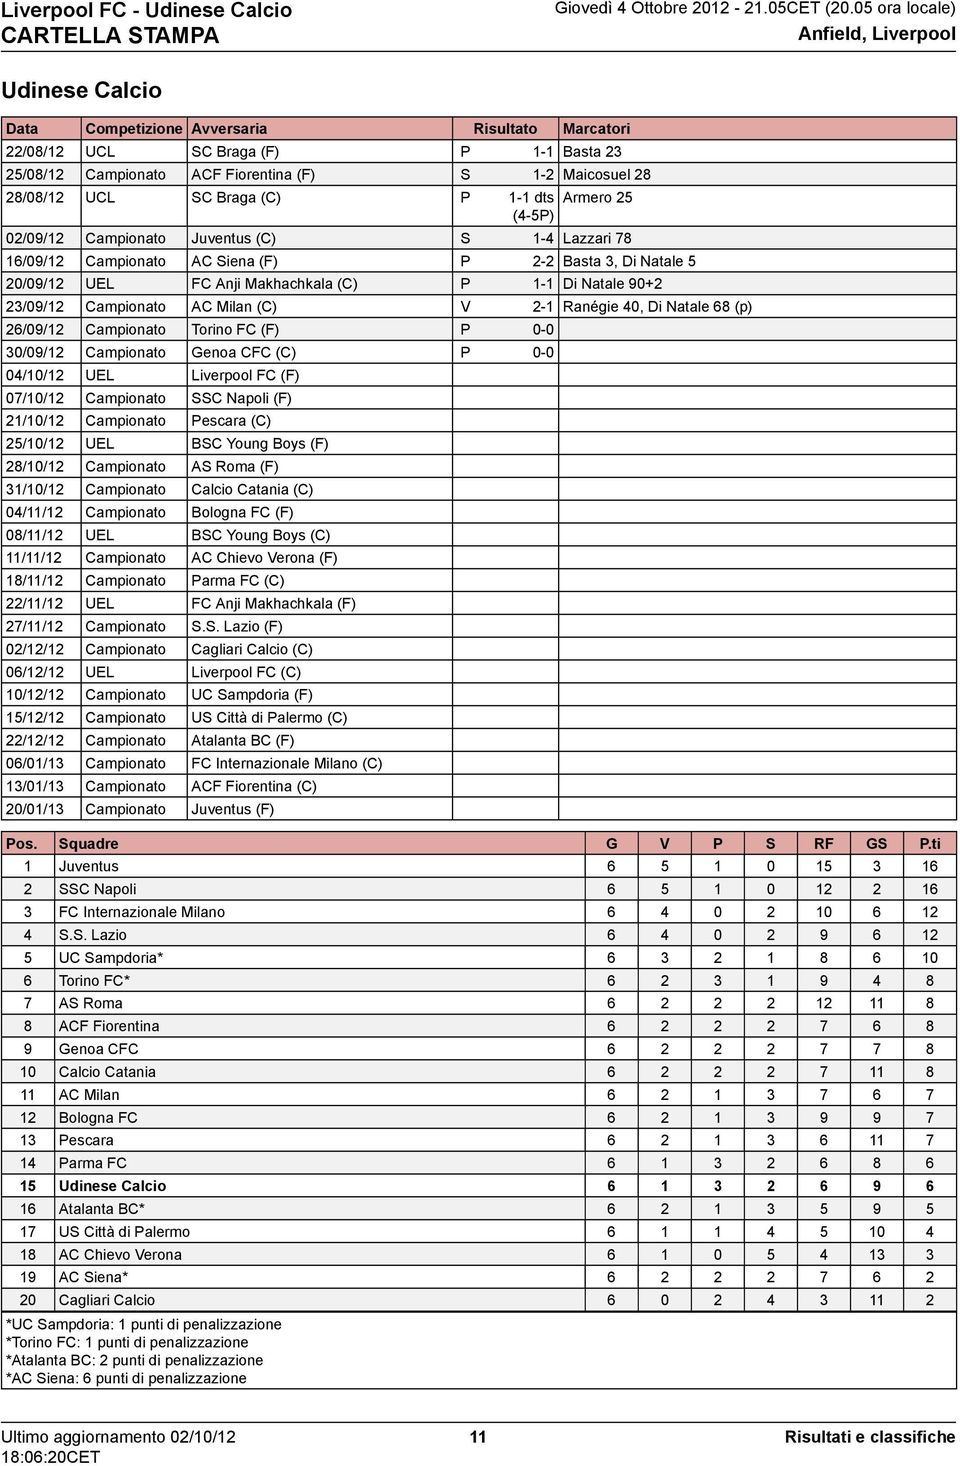 UEL FC Anji Makhachkala (C) P // Campionato AC Milan (C) V // Campionato Torino FC (F) P // Campionato enoa CFC (C) P // UEL FC (F) // Campionato SSC Napoli (F) // Campionato Pescara (C) // UEL BSC